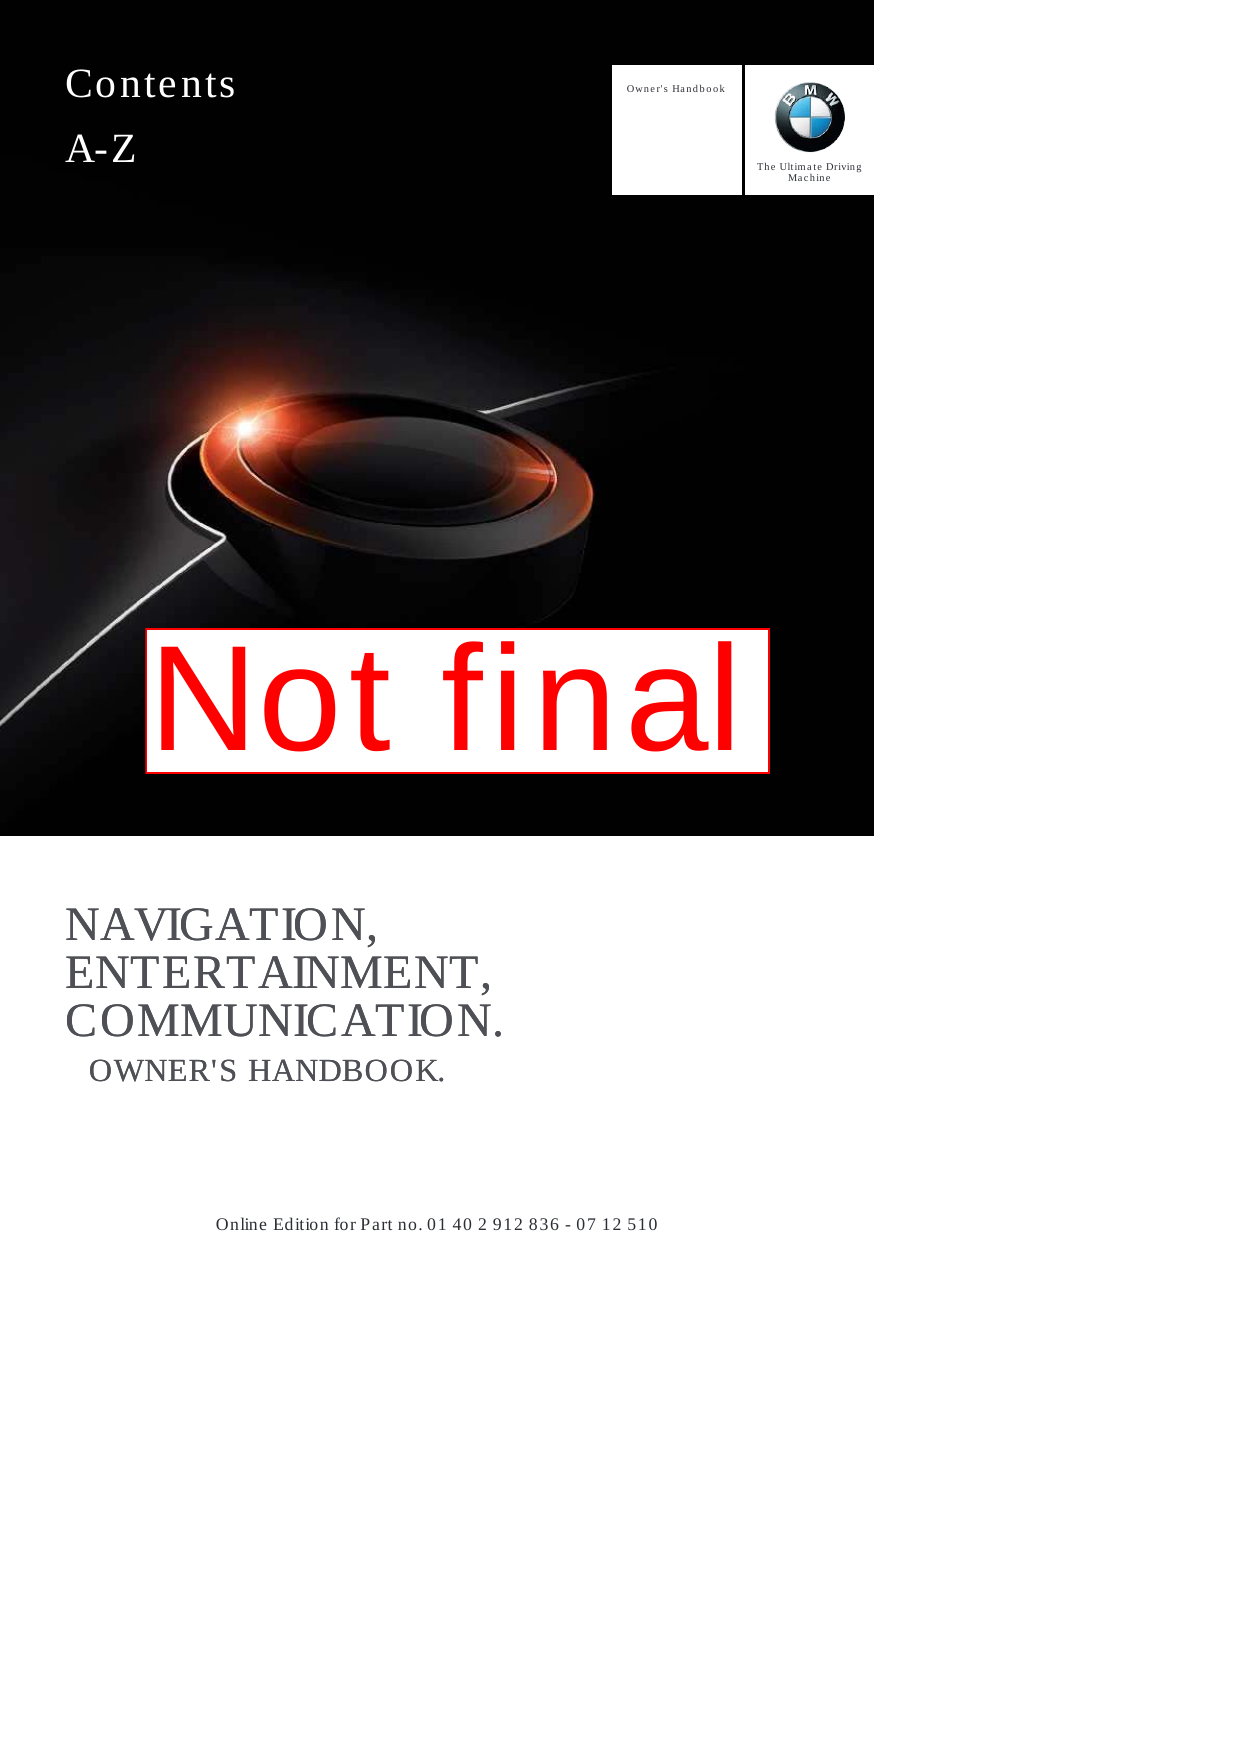 Owner&apos;s HandbookNAVIGATION,ENTERTAINMENT,COMMUNICATION.OWNER&apos;S HANDBOOK.The Ultimate DrivingMachineNAVIGATION,ENTERTAINMENT,COMMUNICATION.OWNER&apos;S HANDBOOK.ContentsA-ZOnline Edition for Part no. 01 40 2 912 836 - 07 12 510Not final